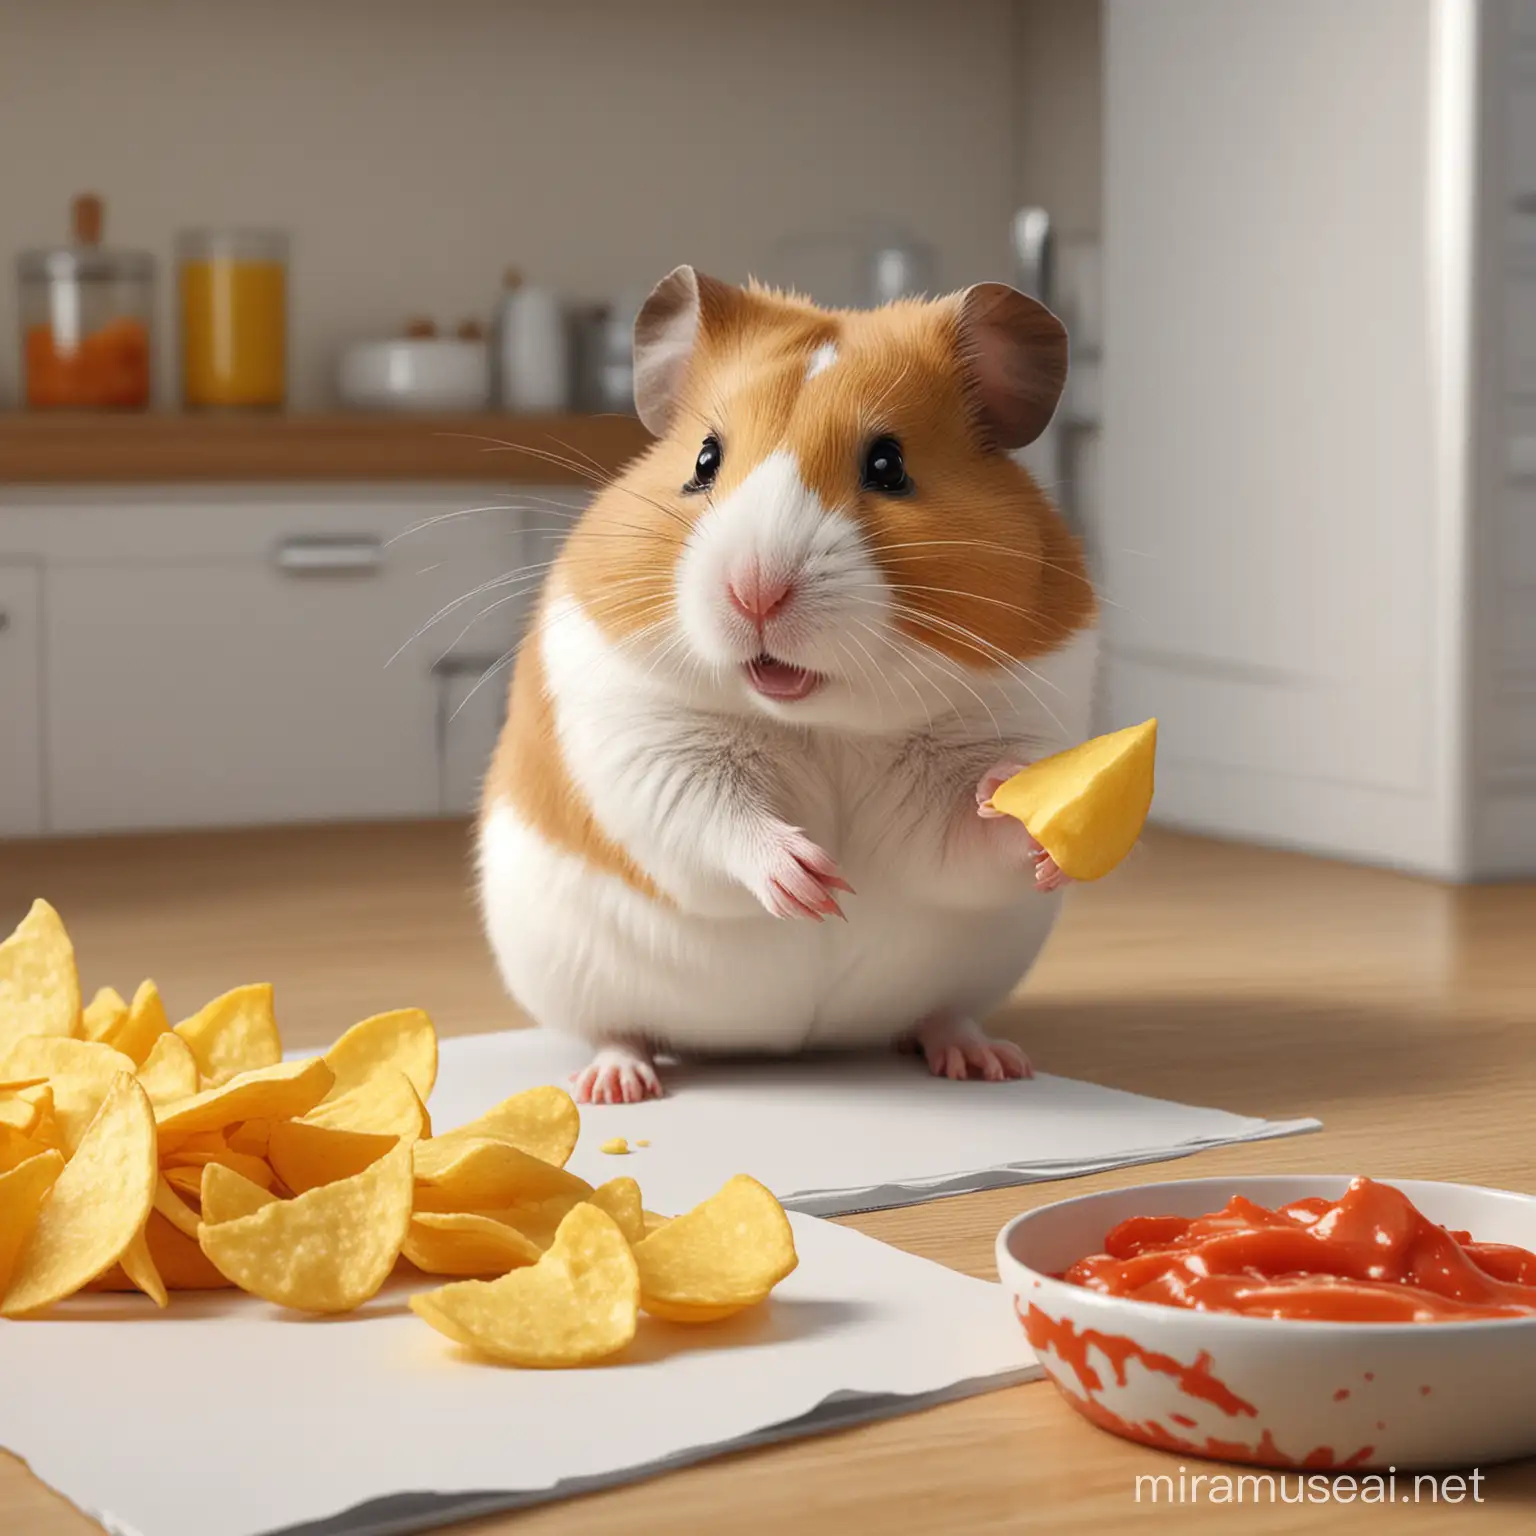 Adorable Hamster Artist Enjoying Chips in Cozy Room